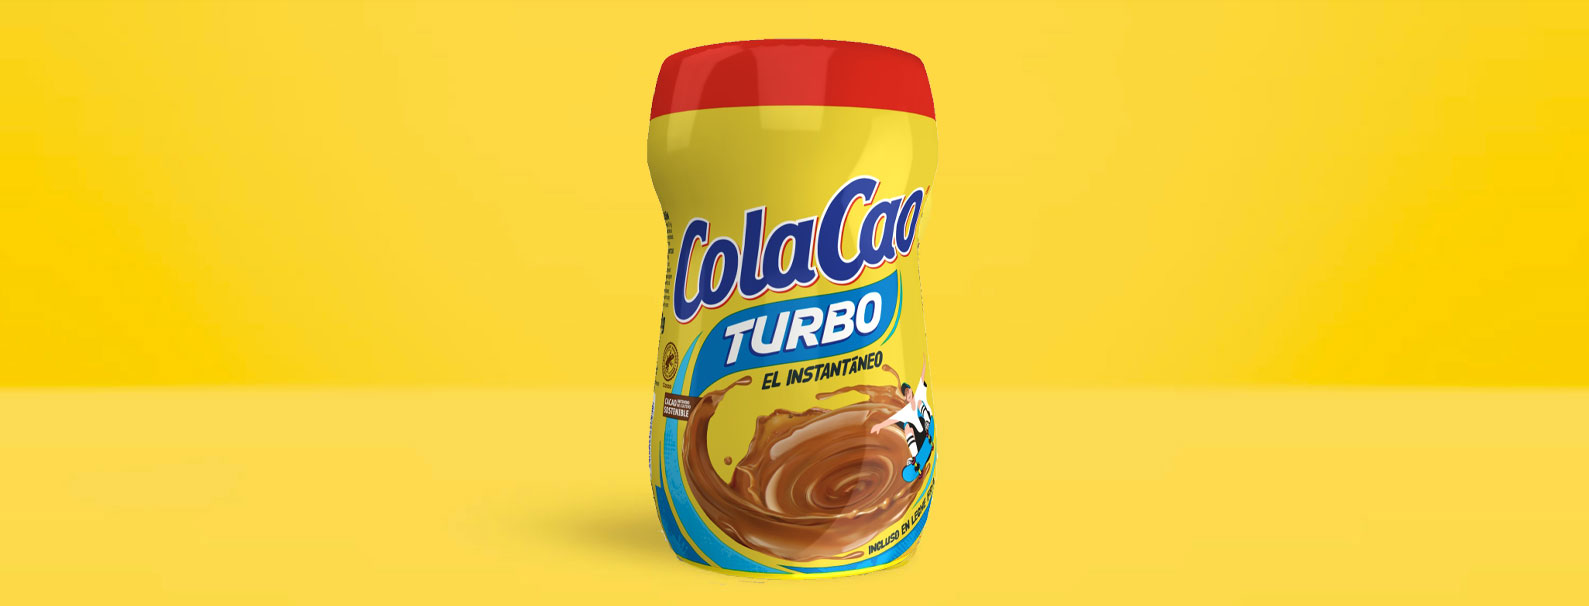 ColaCao turbo